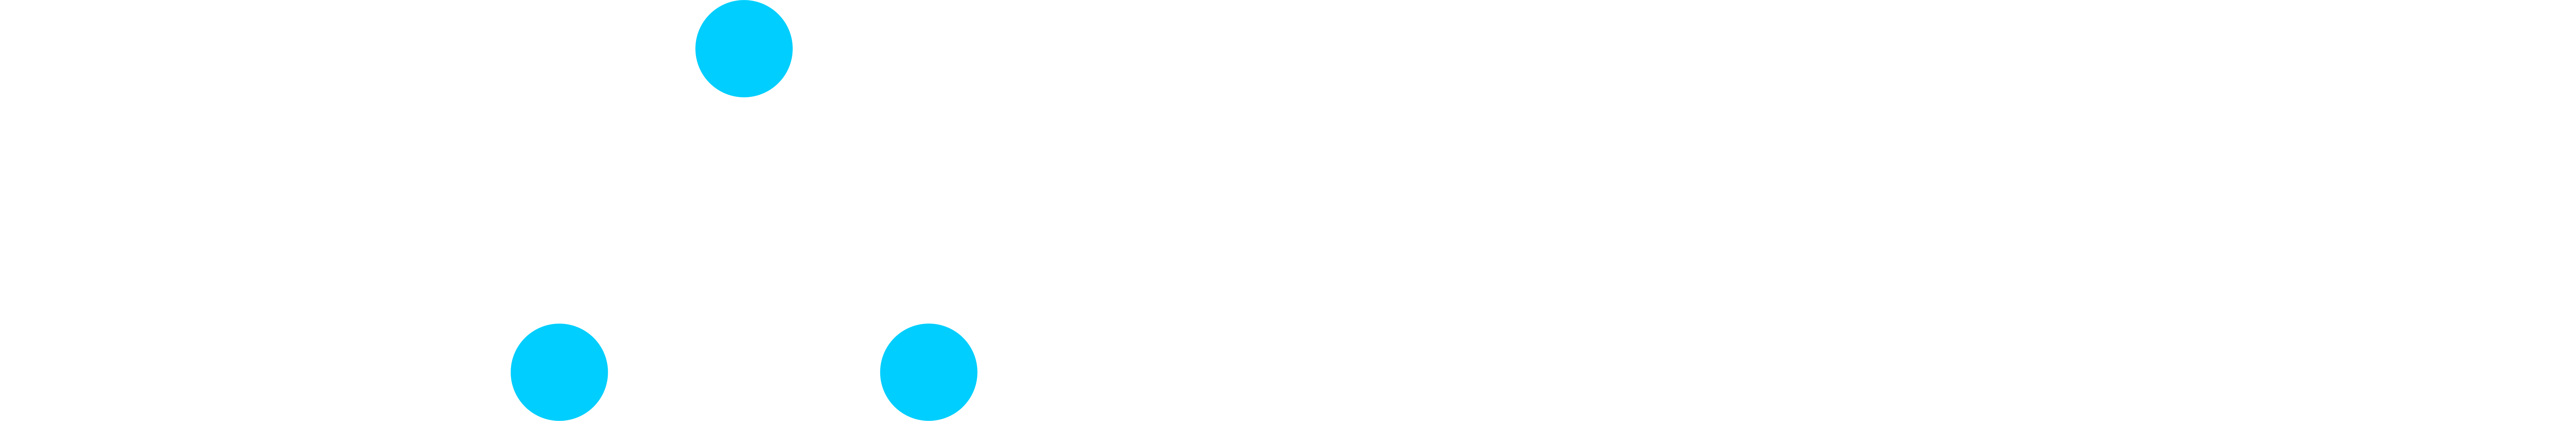 MATCHO logo - transparent/white background